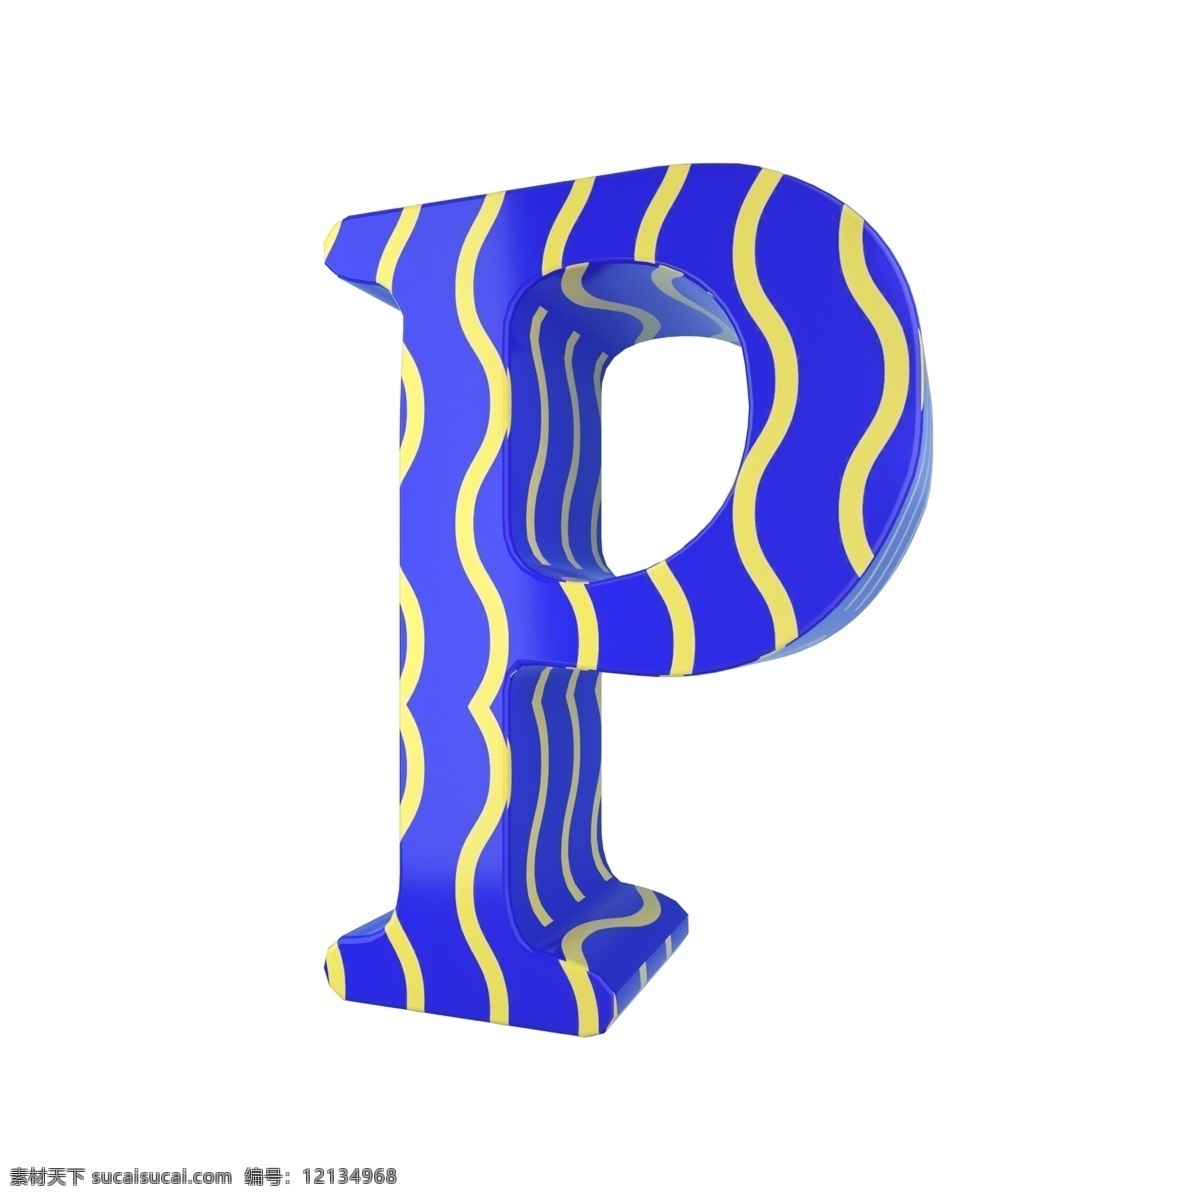 c4d 孟菲斯 风格 立体 字母 p 装饰 3d 孟菲斯风格 黄色 蓝色 创意字母 平面海报配图 电商淘宝装饰 字母p